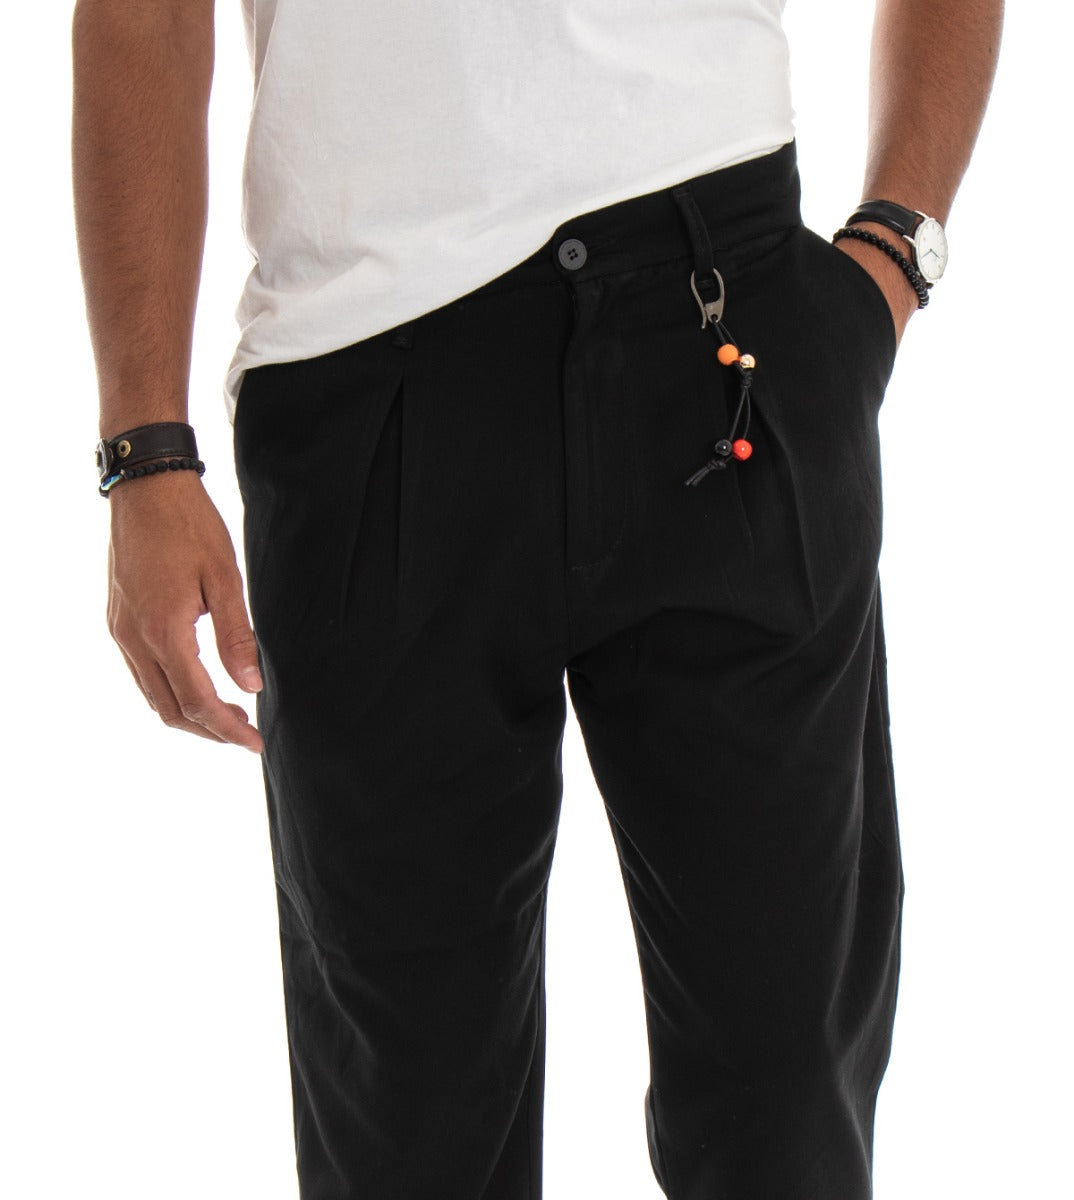 Pantaloni Uomo Tasca America Con Pinces Tinta Unita Nero Affusolati GIOSAL-P3207A